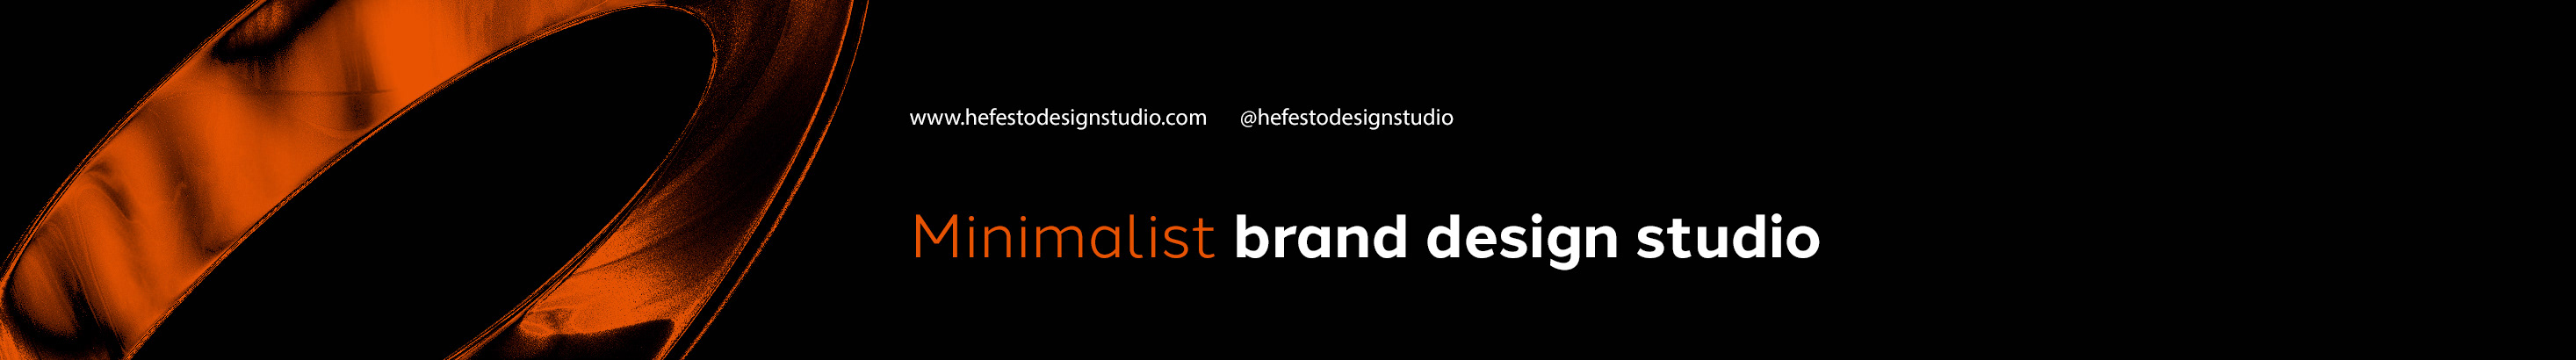 Hefesto Design Studio のプロファイルバナー